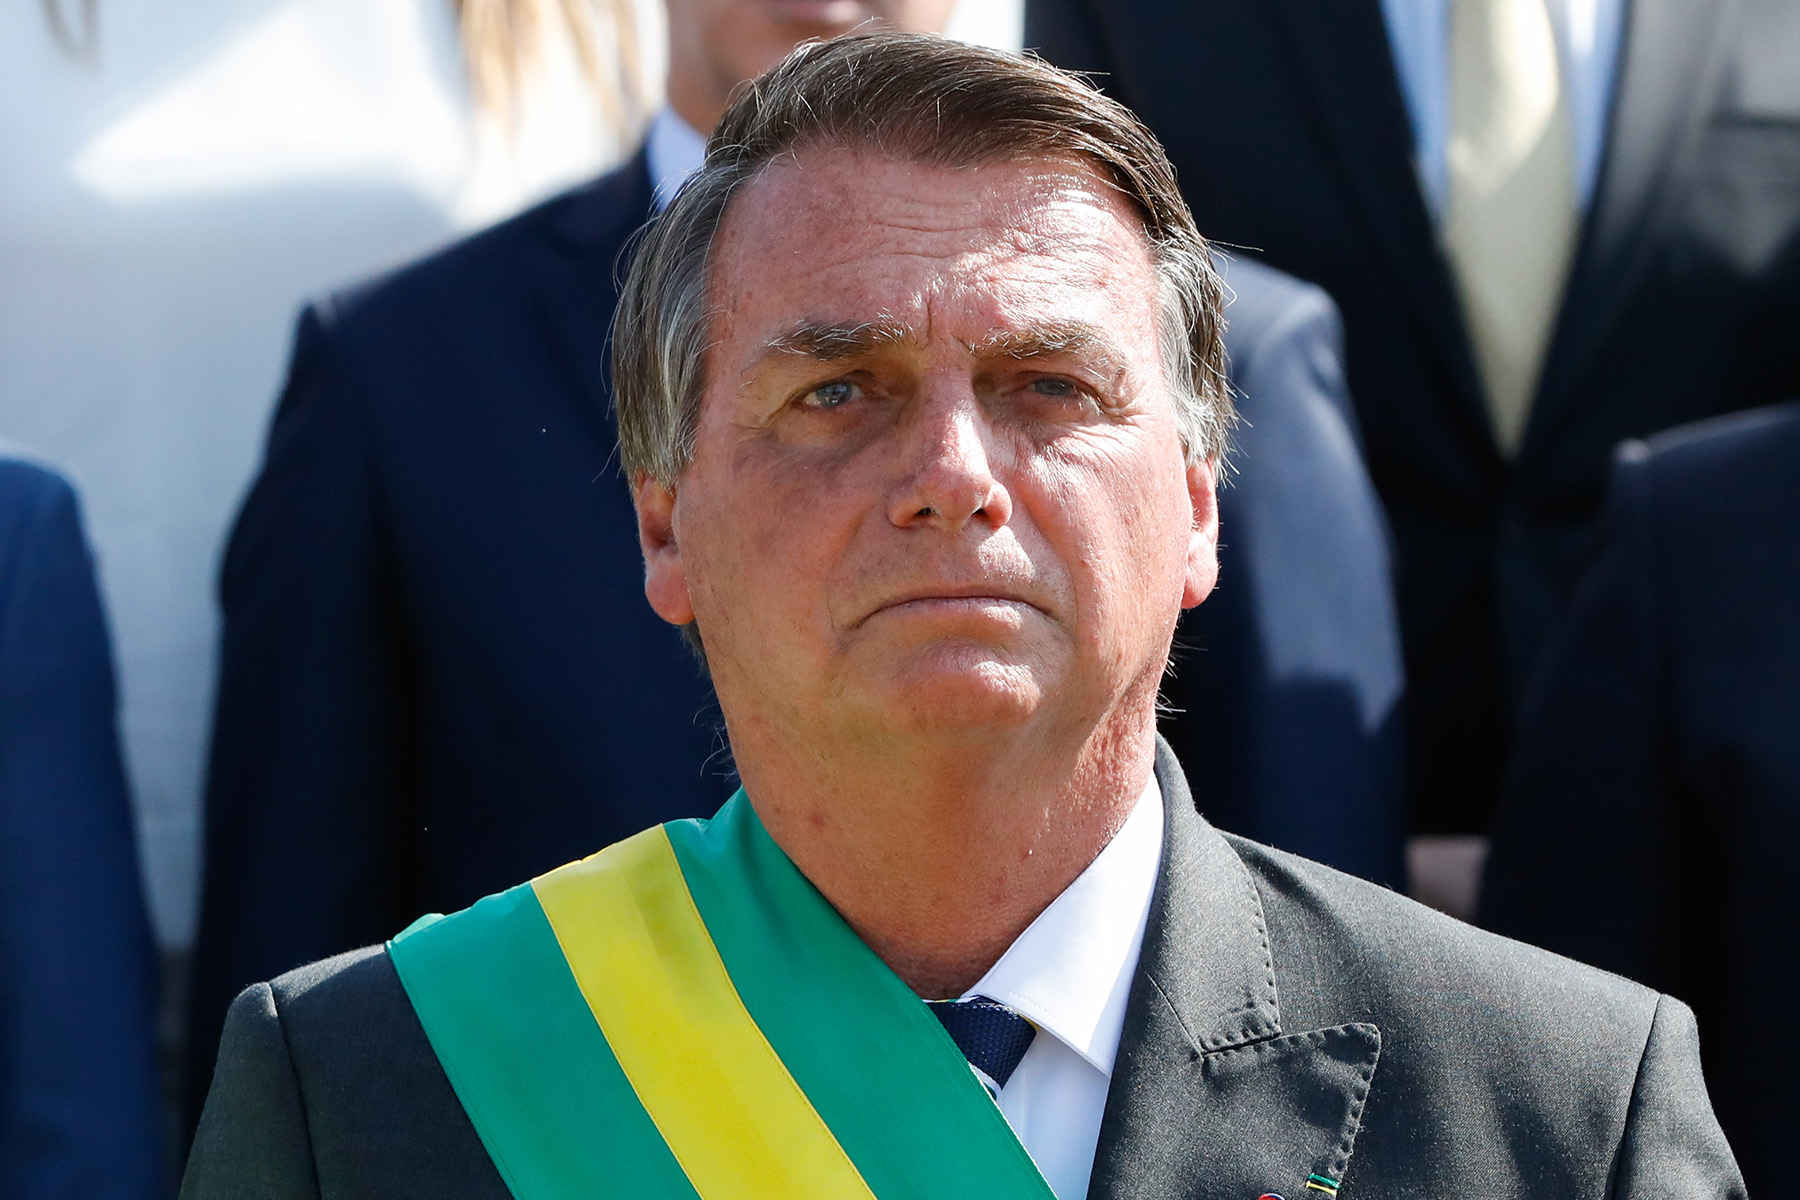 Jair Bolsonaro wearing a green sash looking ahead pensively.; Listen Now on NPR